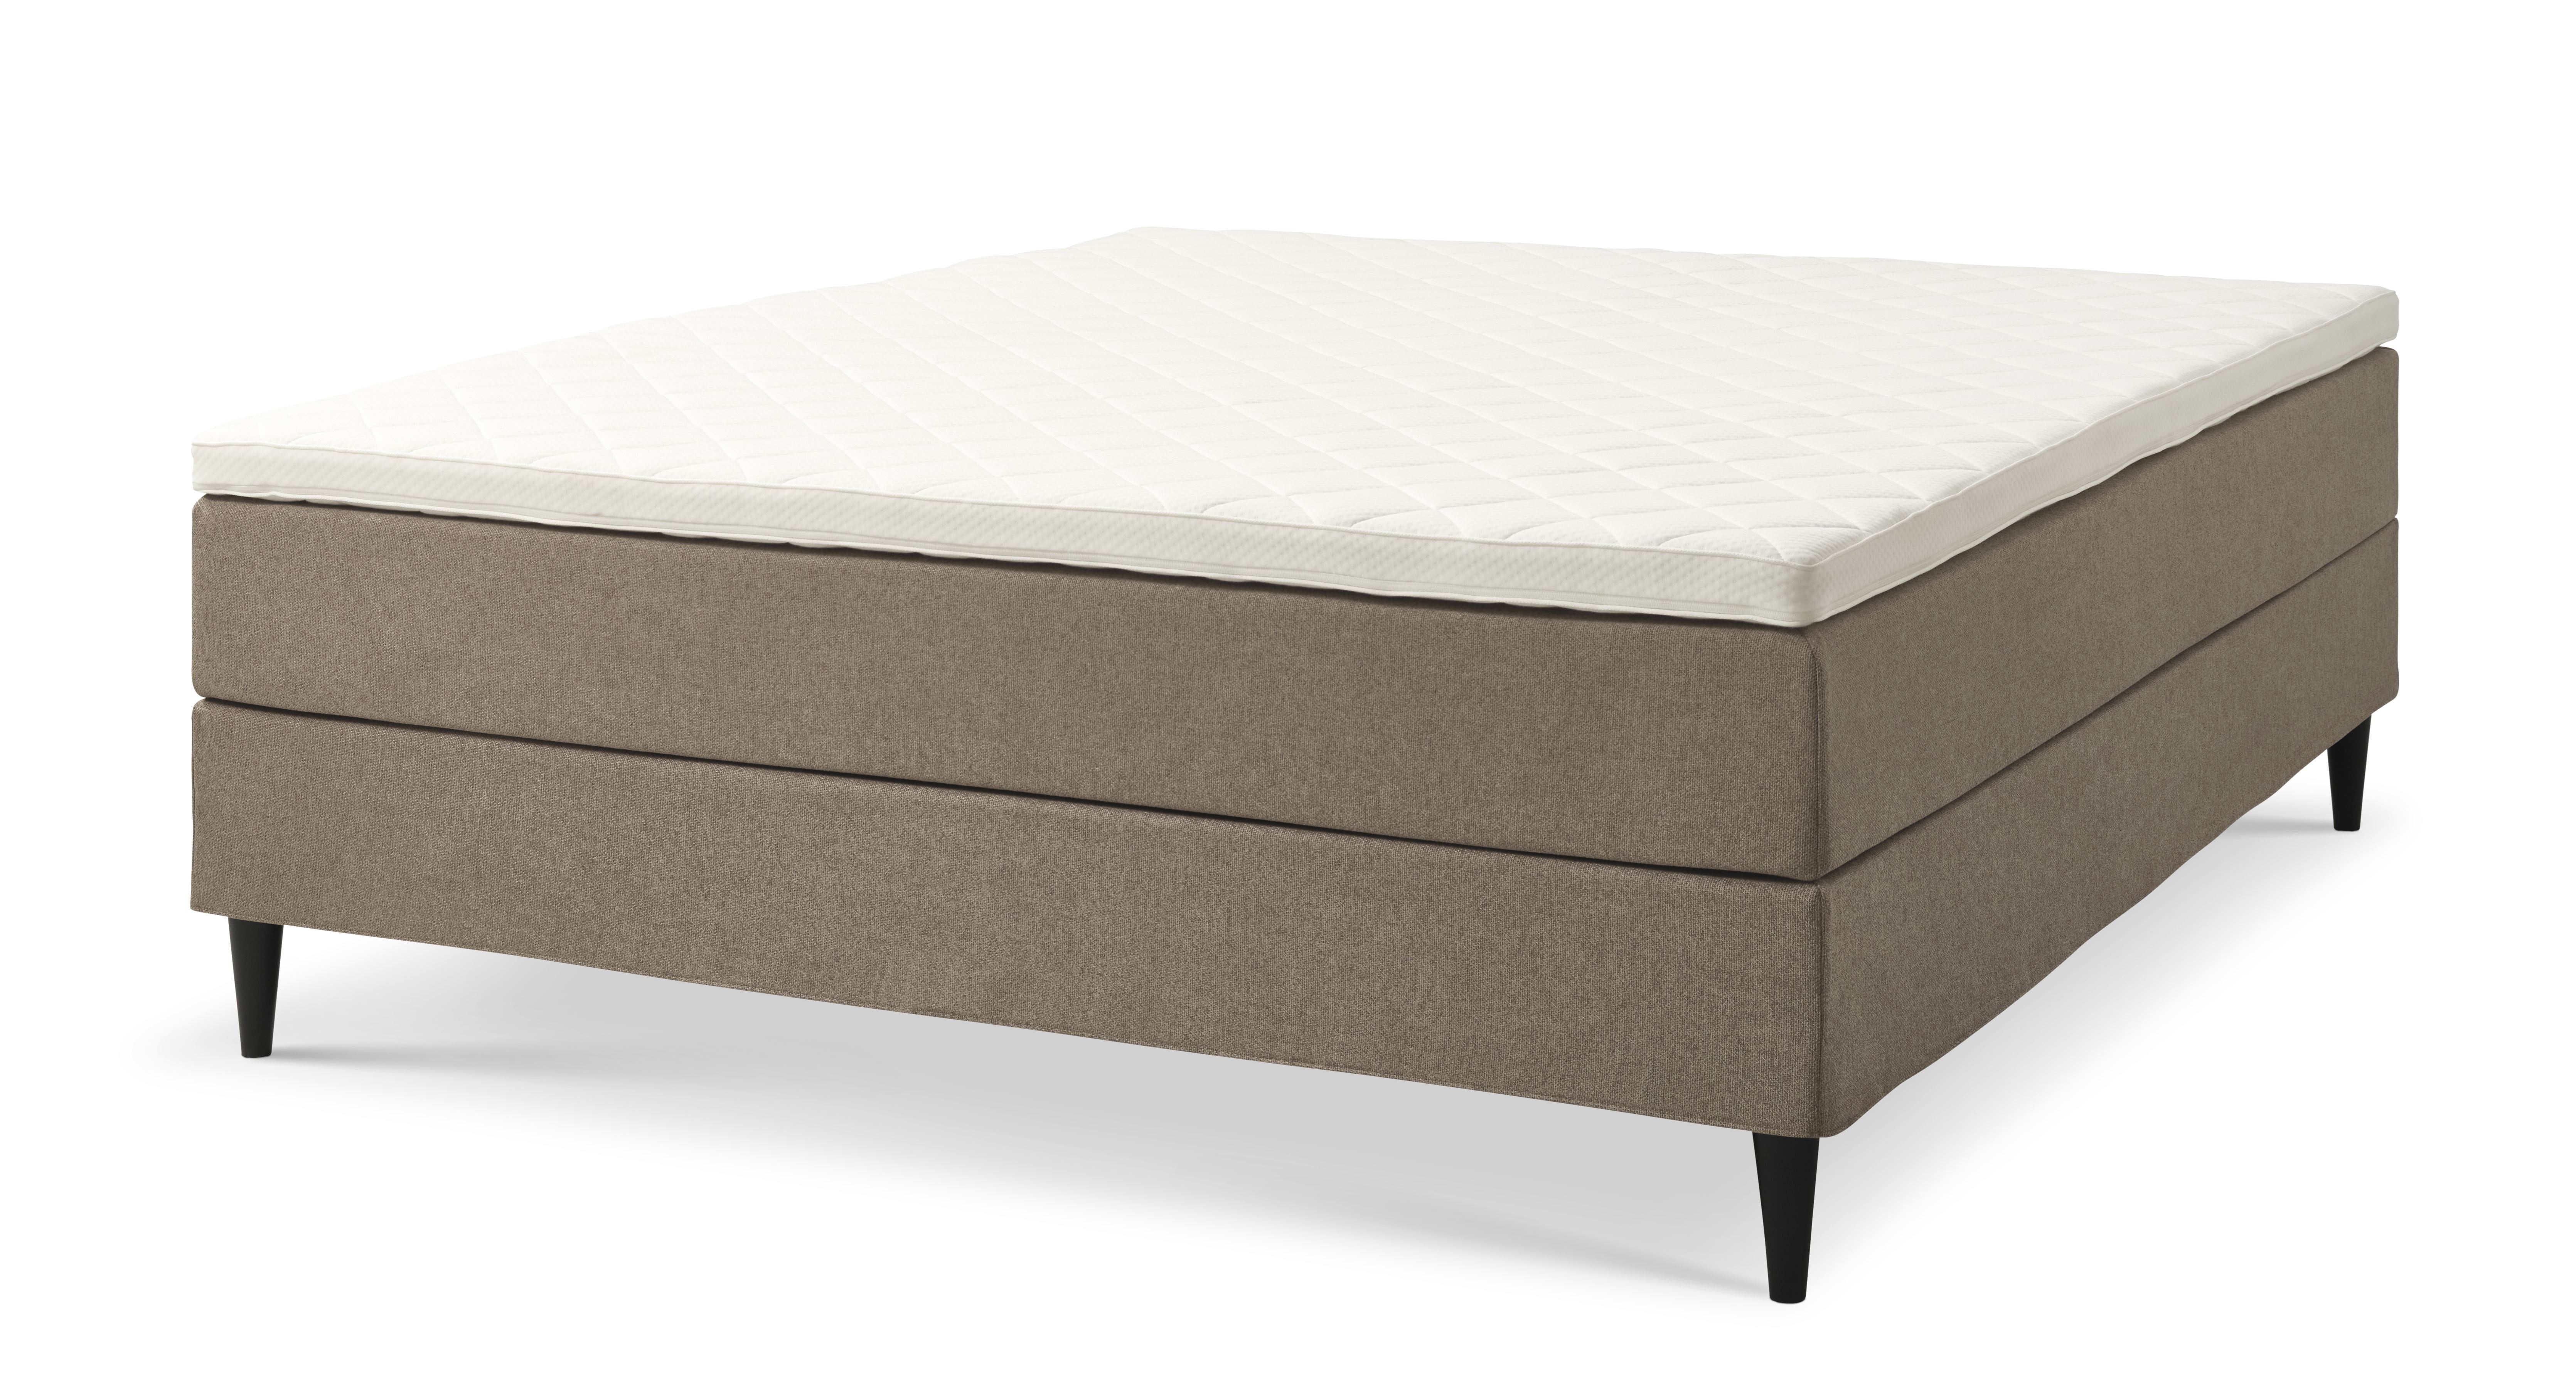 Comfort Plus Dreams sengebund, u. topmadras og u. ben - antelope beige polyester stof (200x180) thumbnail